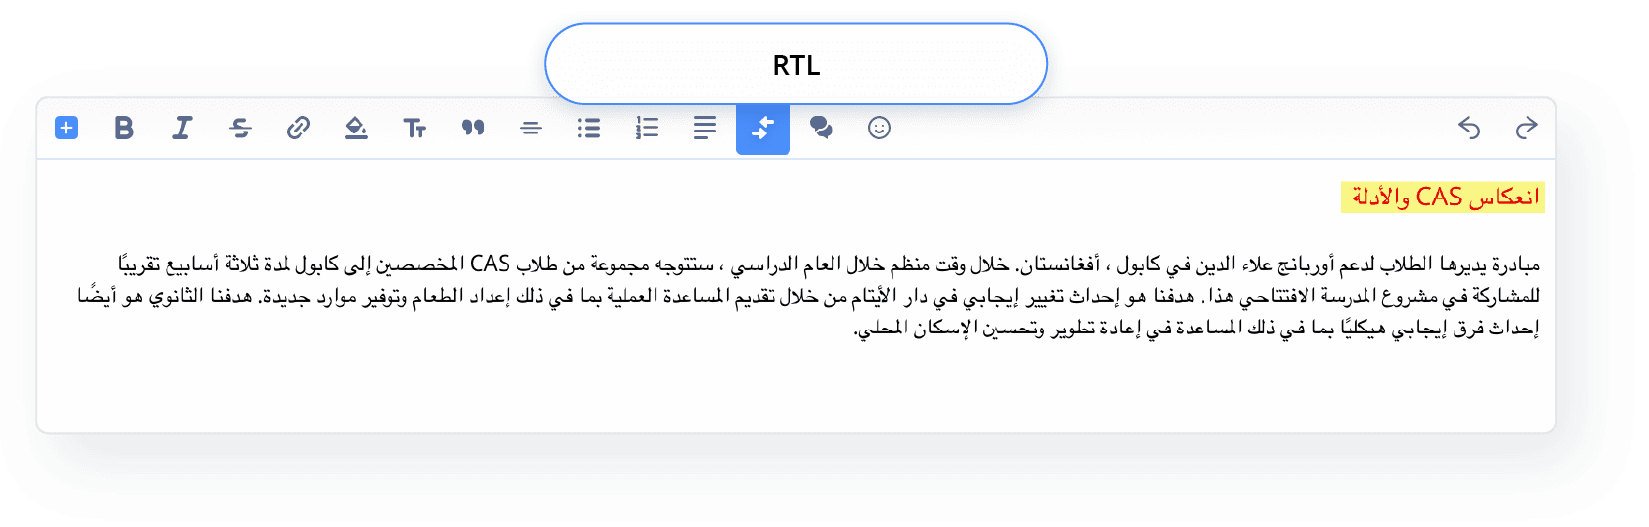 RTL with Arabic